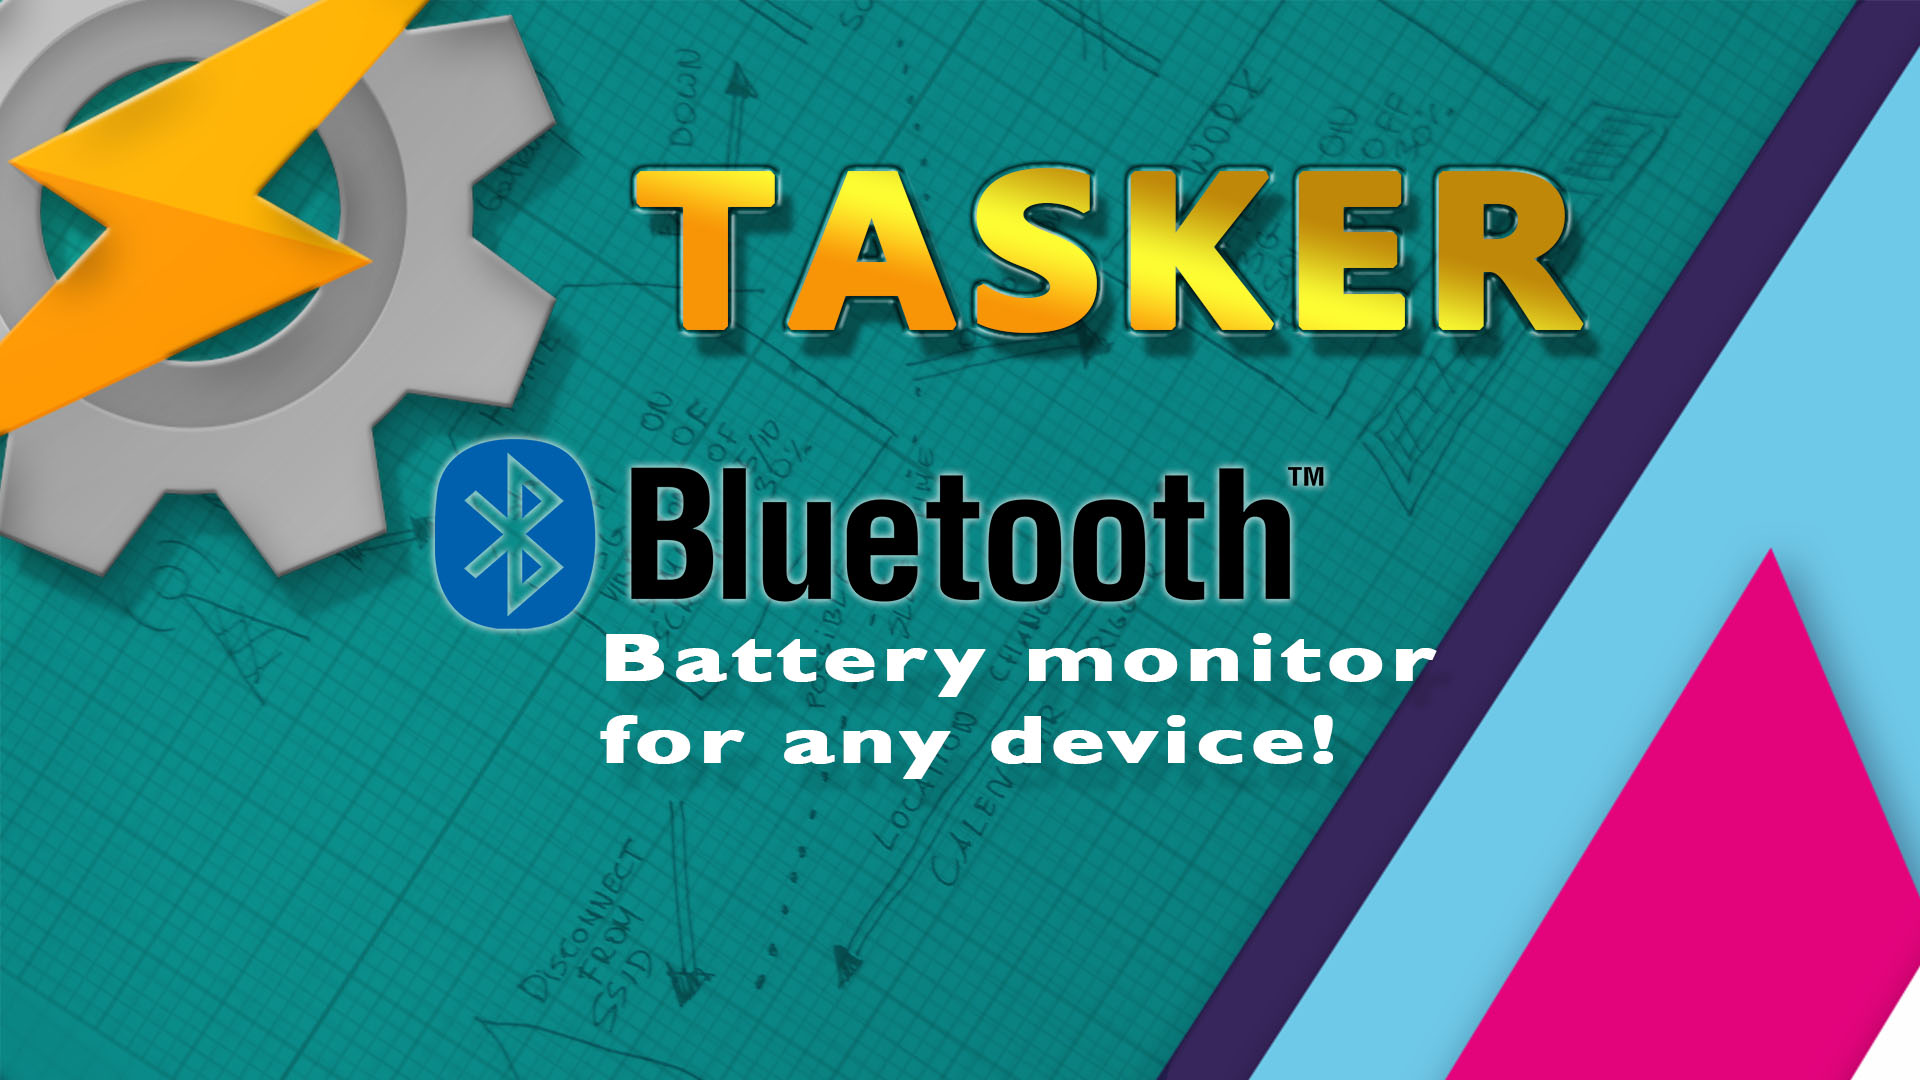 Airfield verden Fra Bluetooth battery monitor - monitor any Bluetooth battery with Tasker -  NotEnoughTech